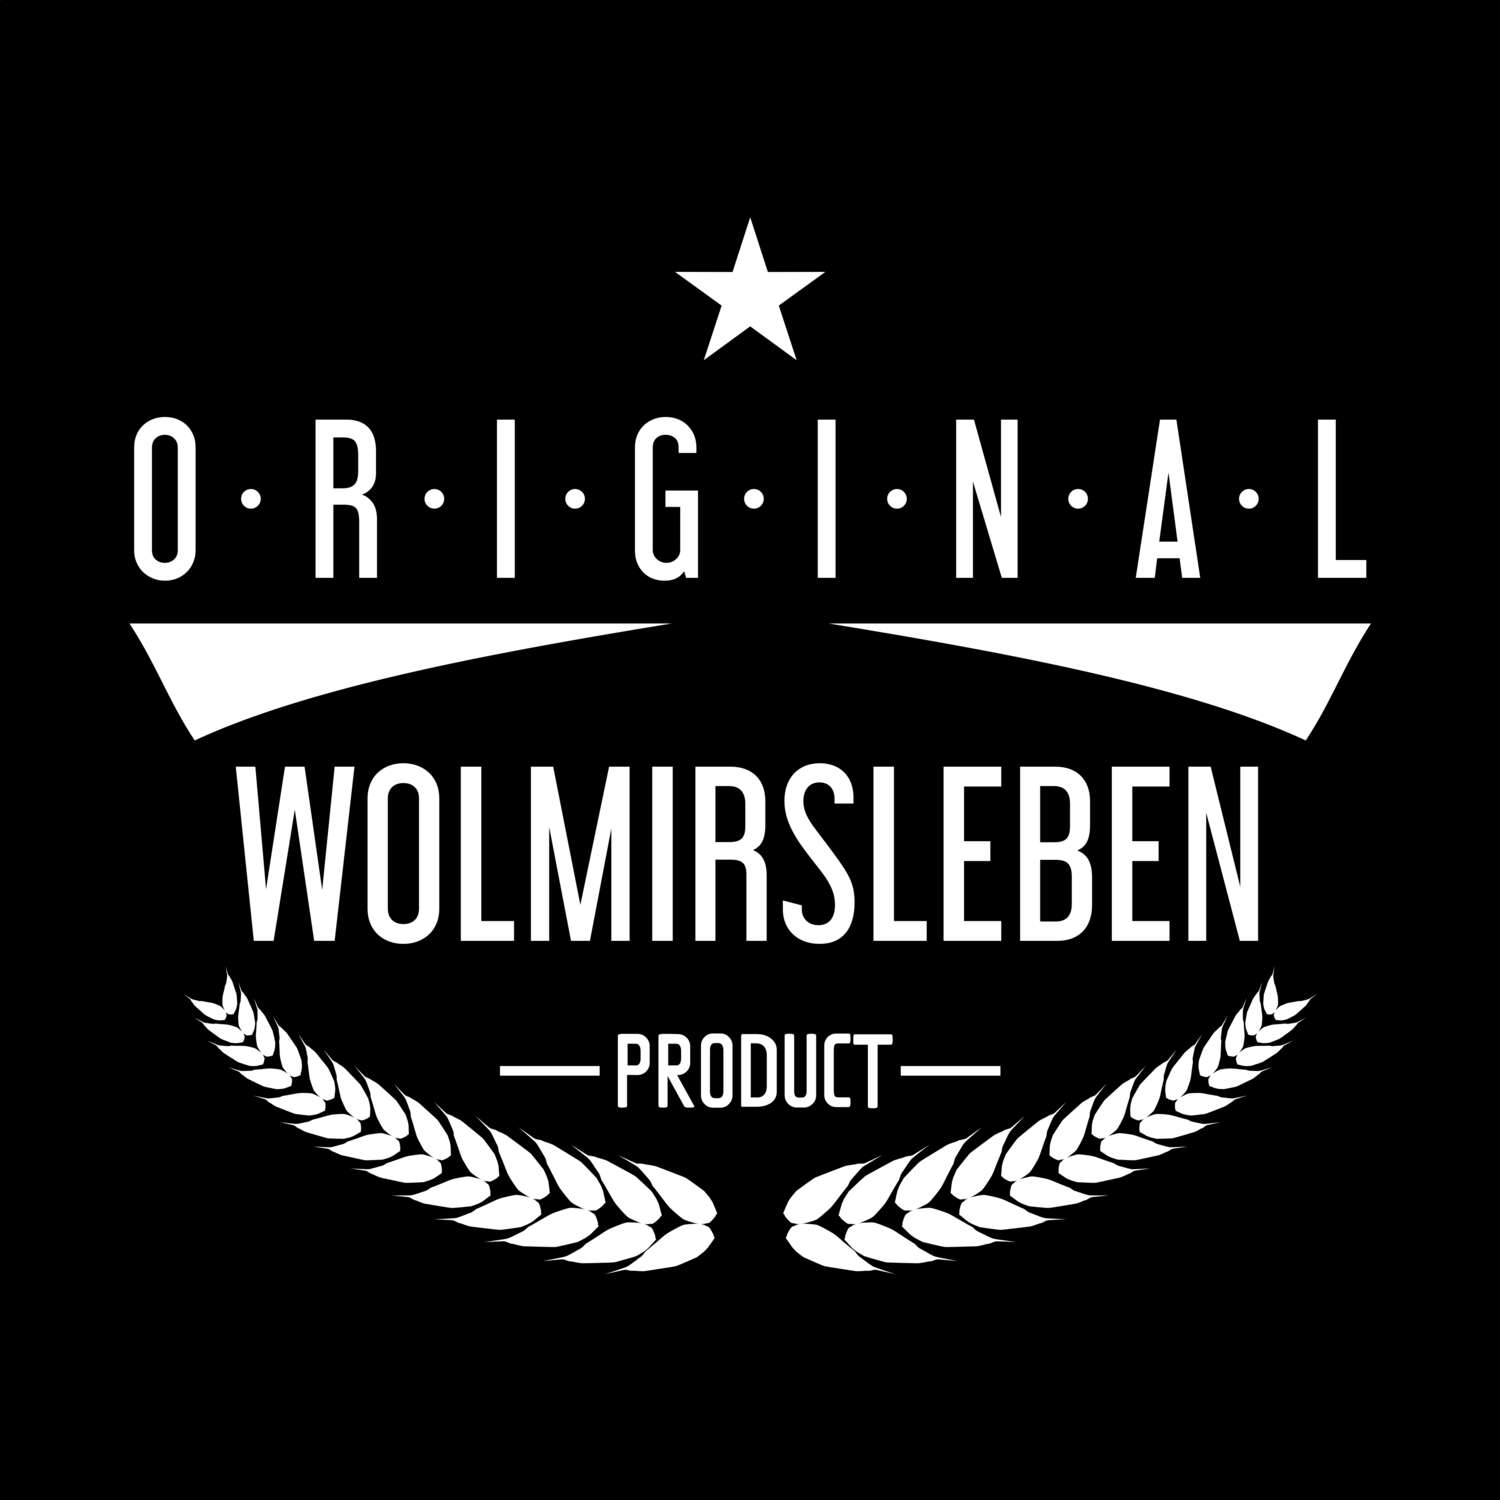 Wolmirsleben T-Shirt »Original Product«